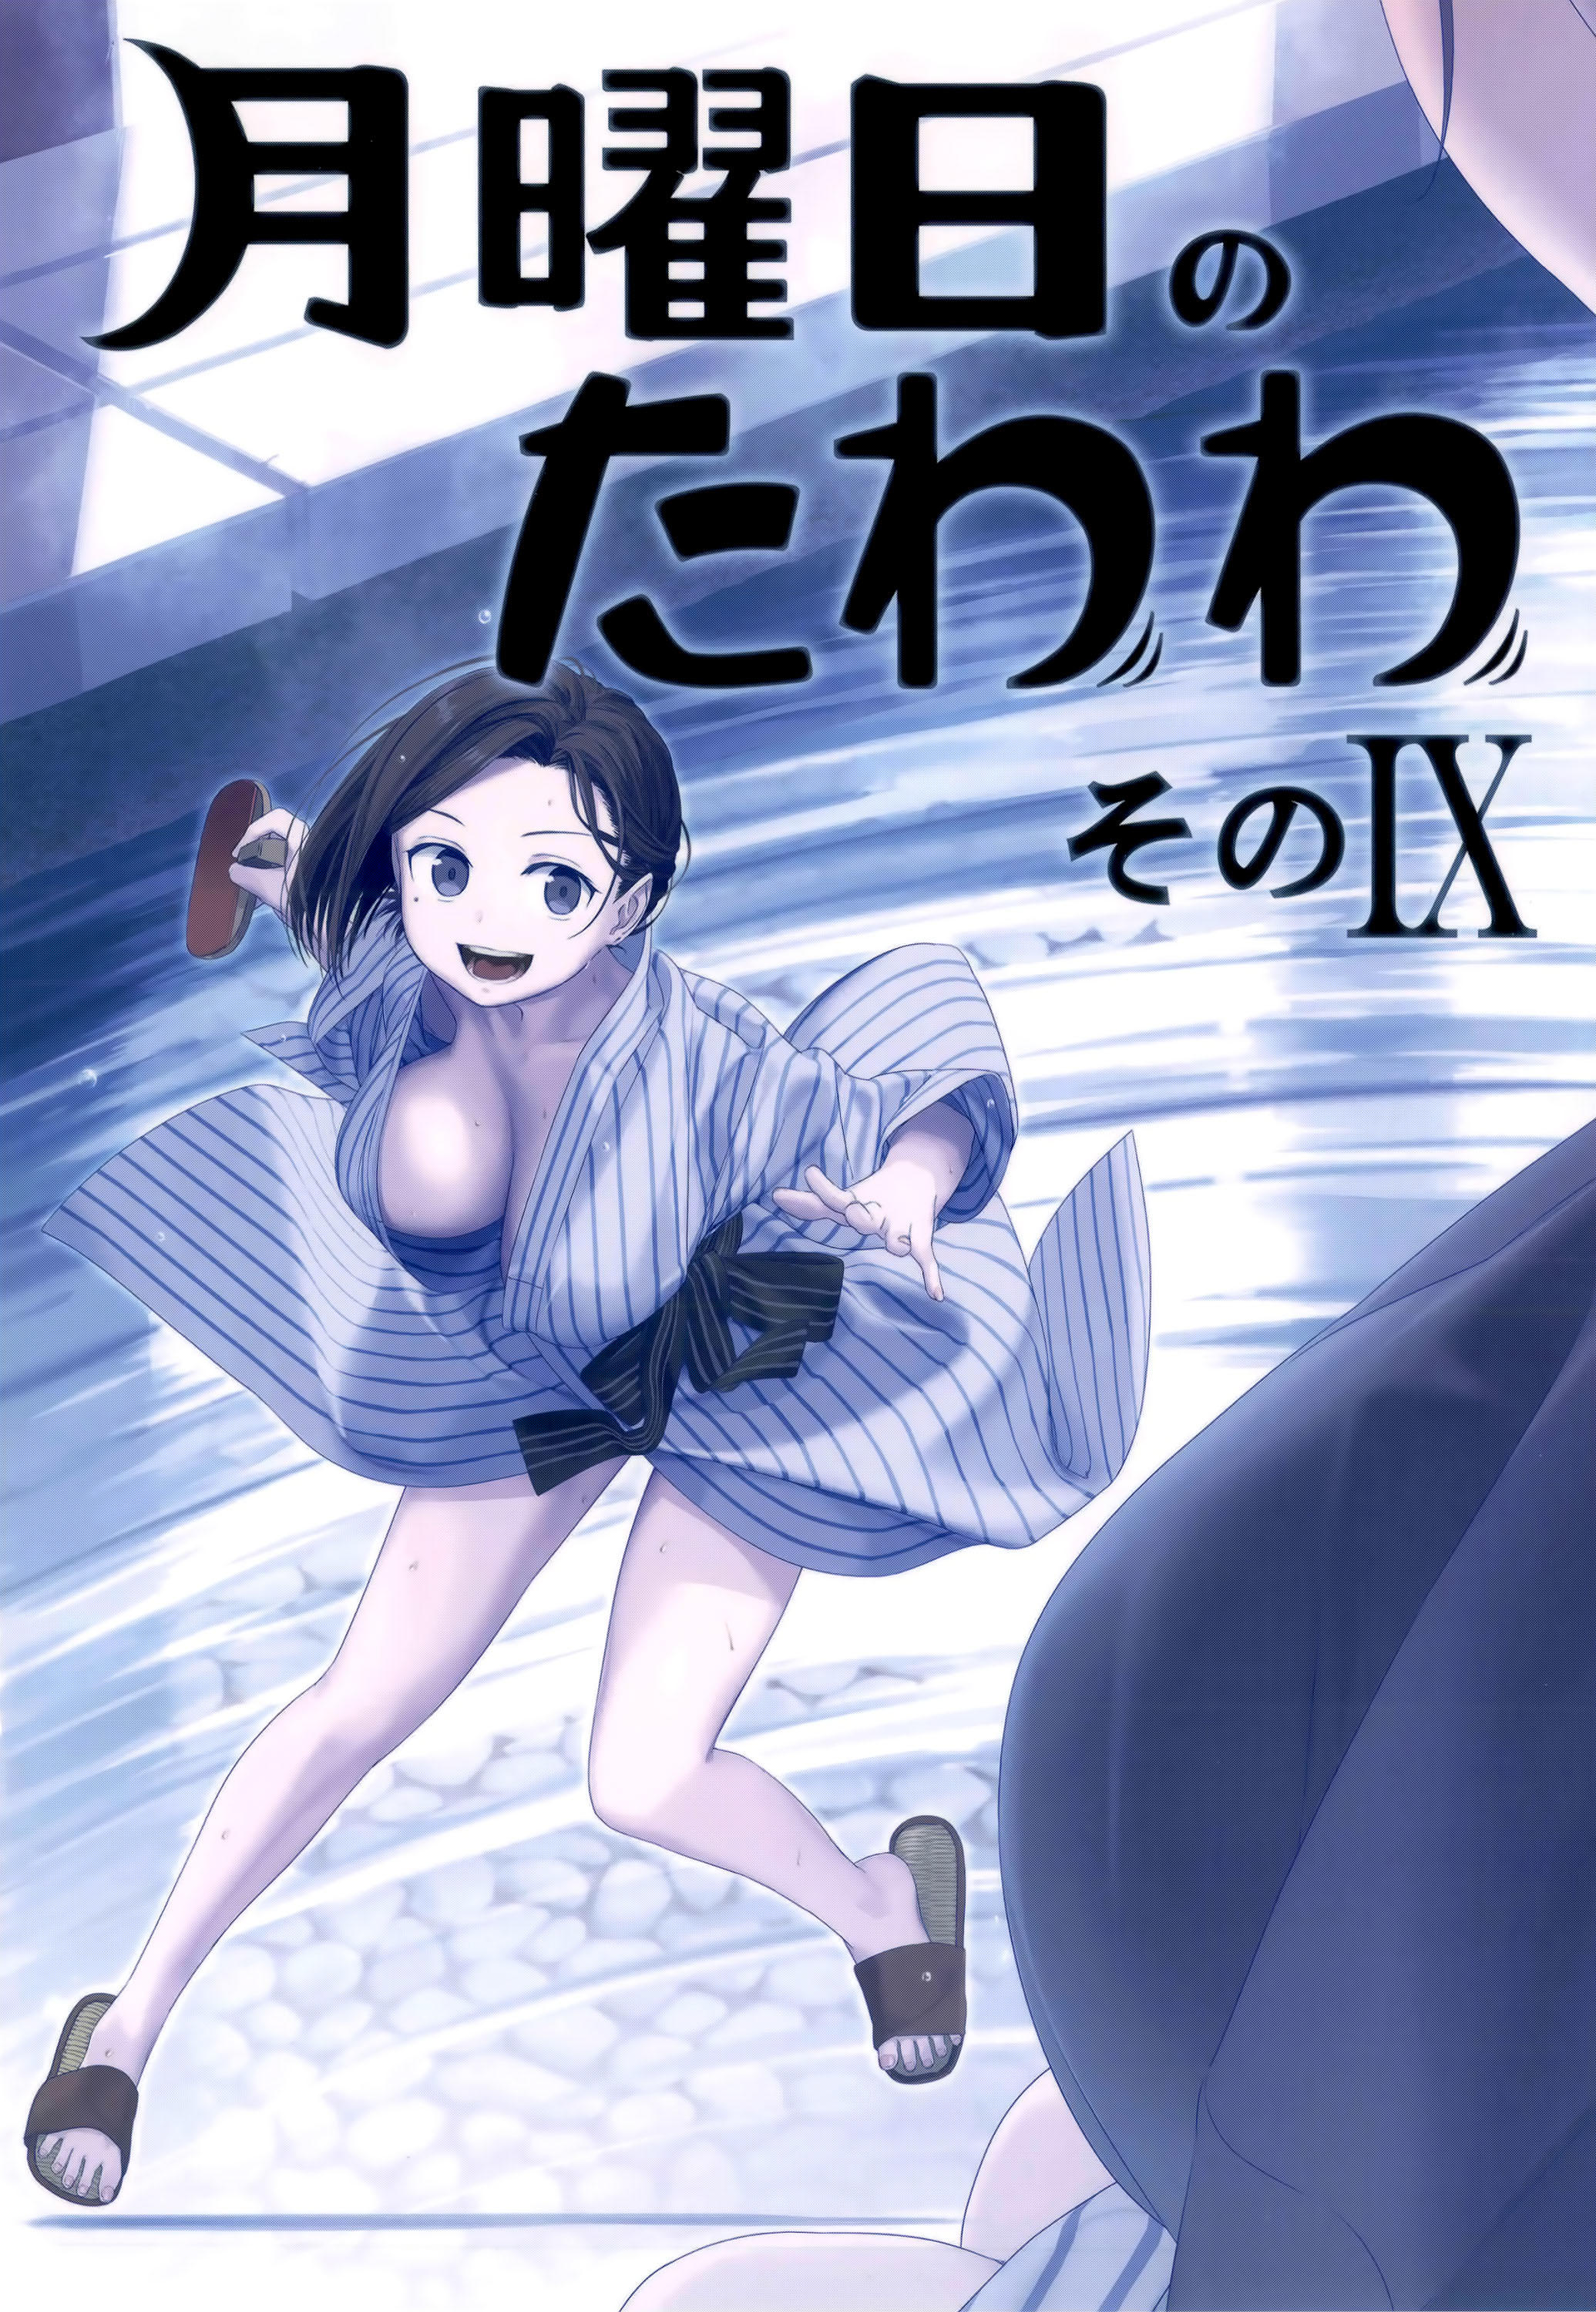 Read Getsuyoubi No Tawawa Chapter 9.5: Getsuyoubi No Tawawa Sono Ix + Α on  Mangakakalot